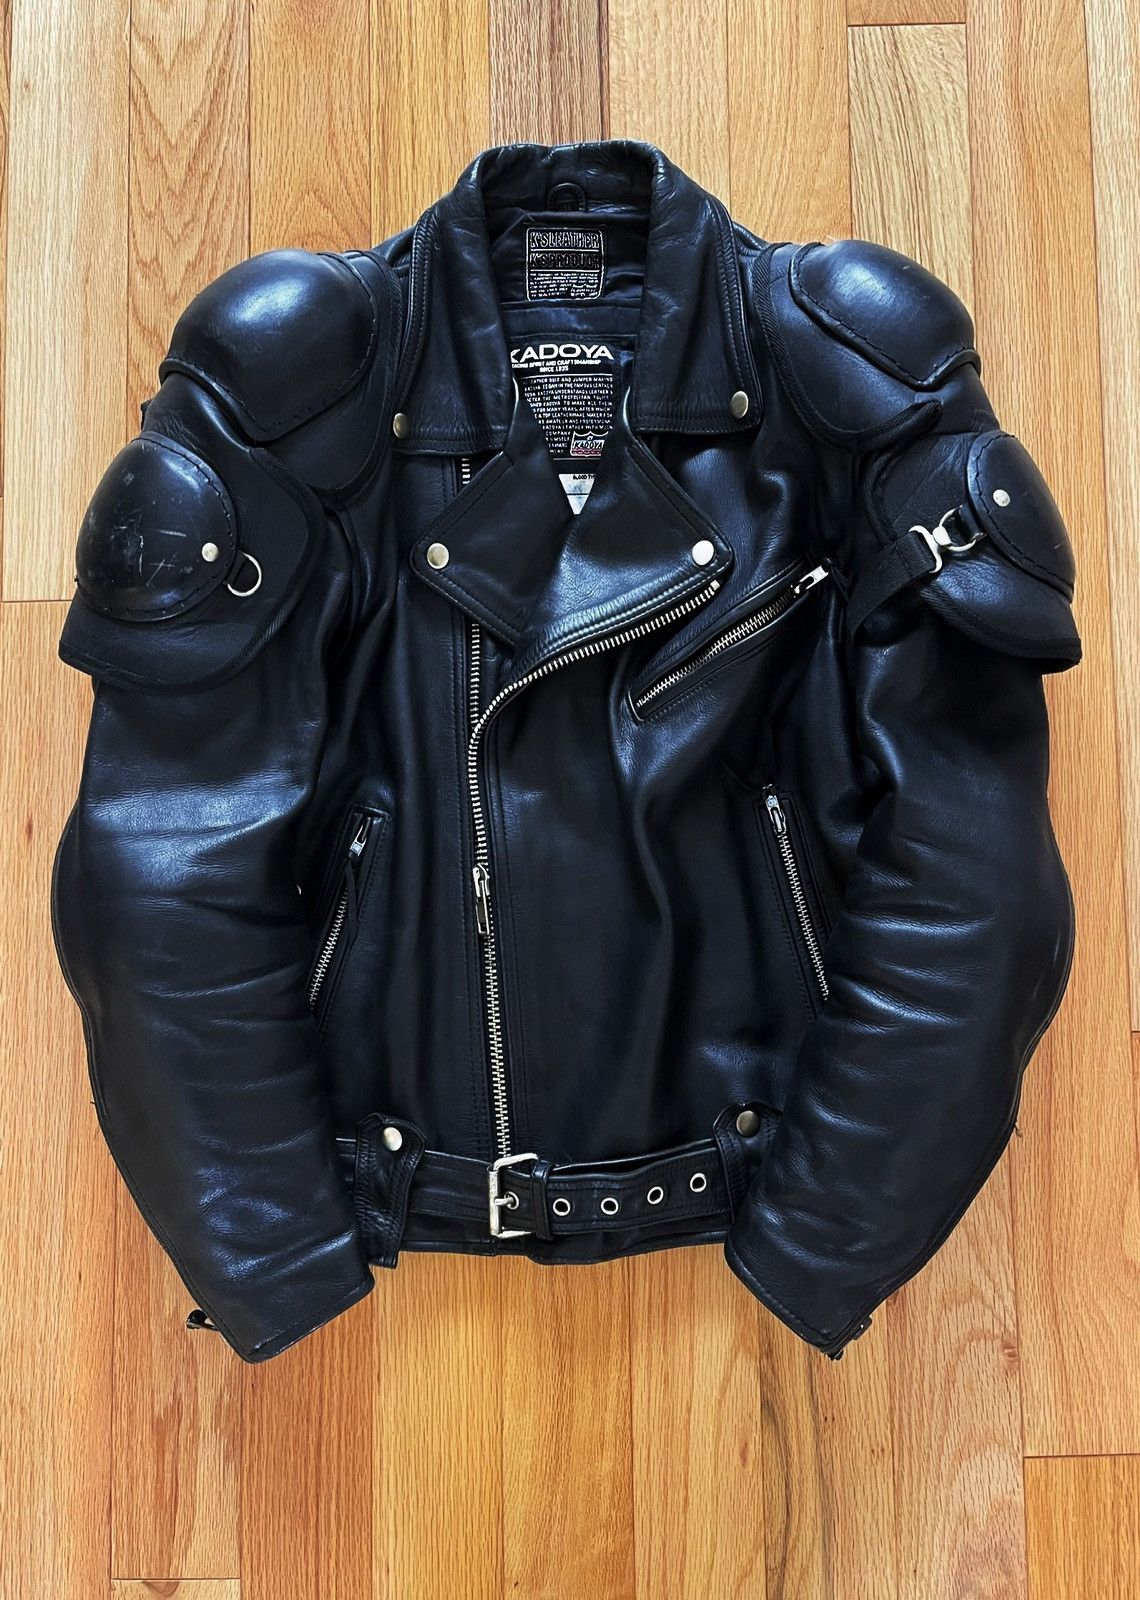 Kadoya Kadoya 'Battlesuit' Armored Black Leather Biker Jacket ...